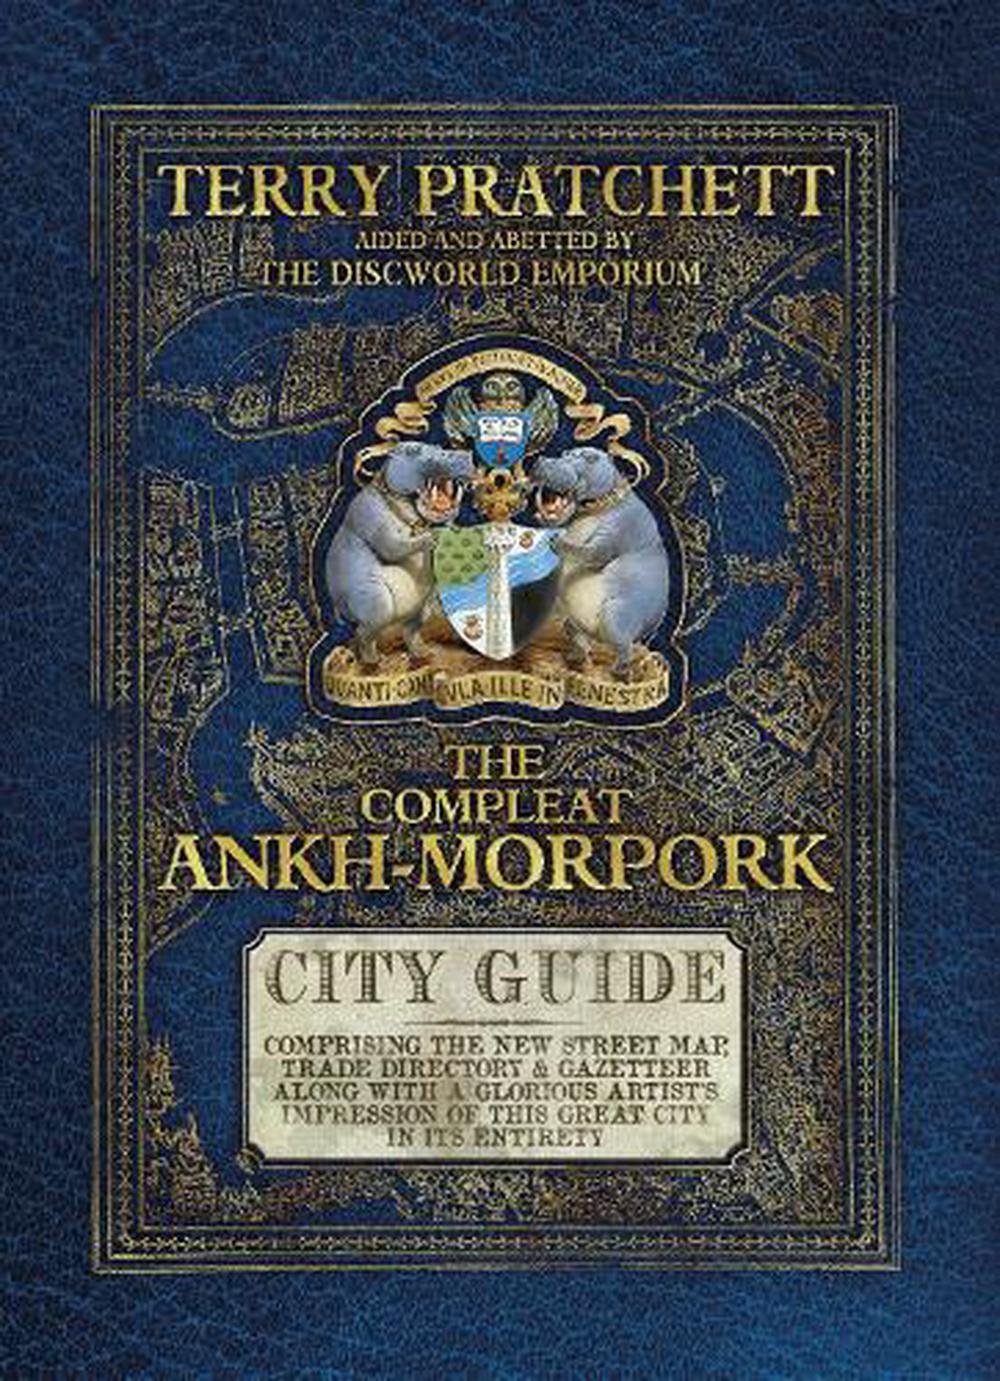 download terry pratchett ankh morpork books